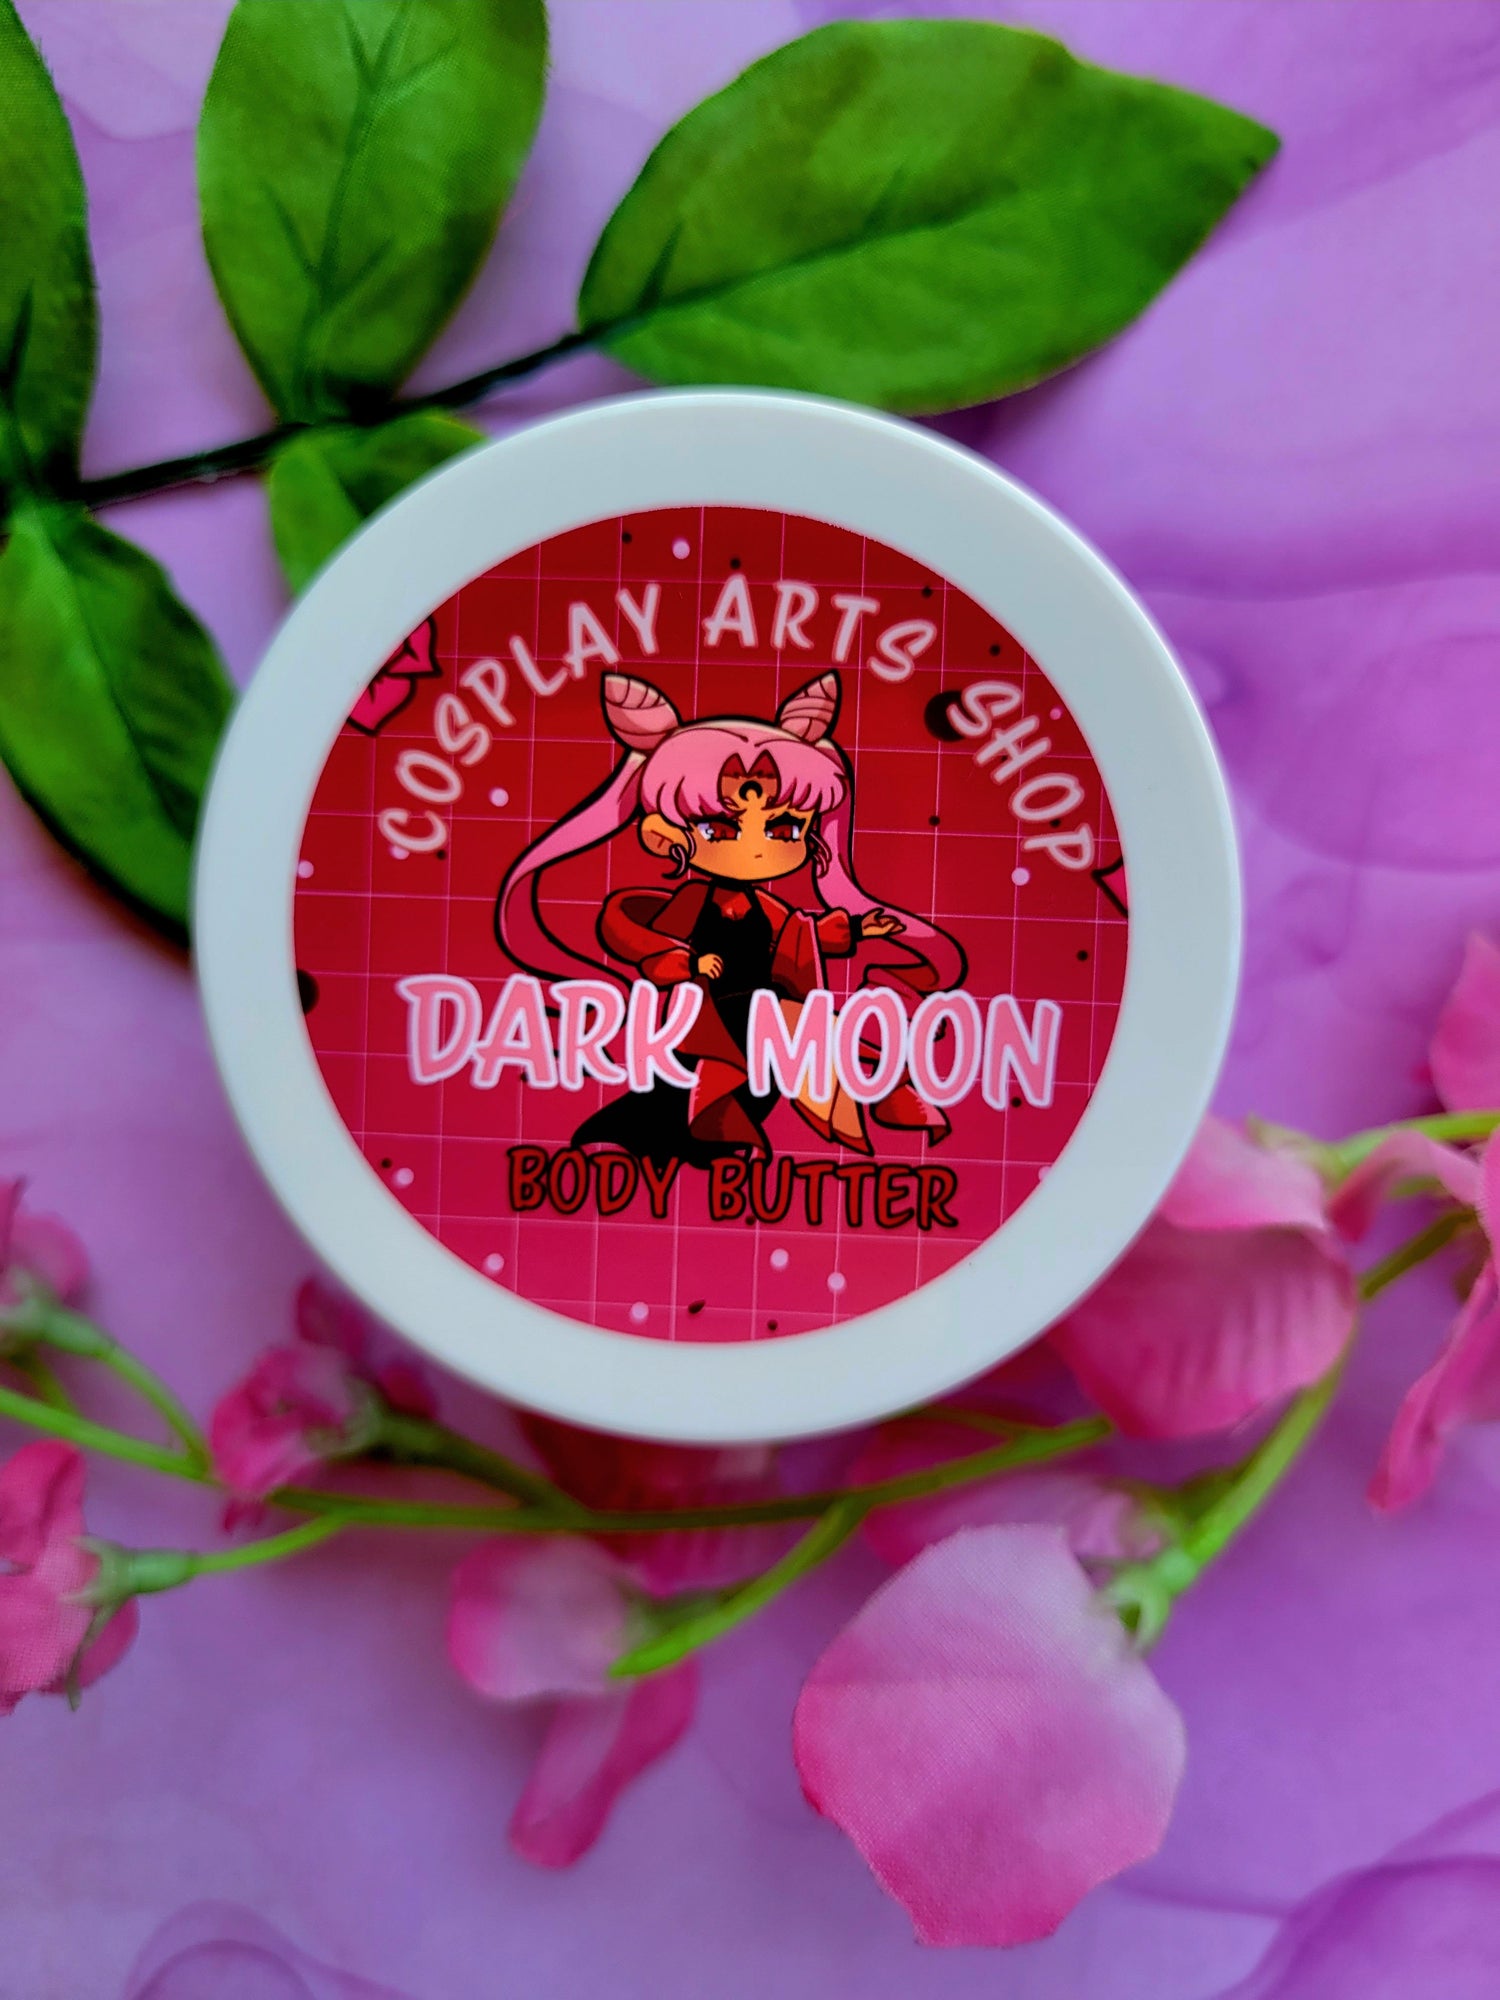 Dark Moon Body Butter - Cosplay Arts Shop